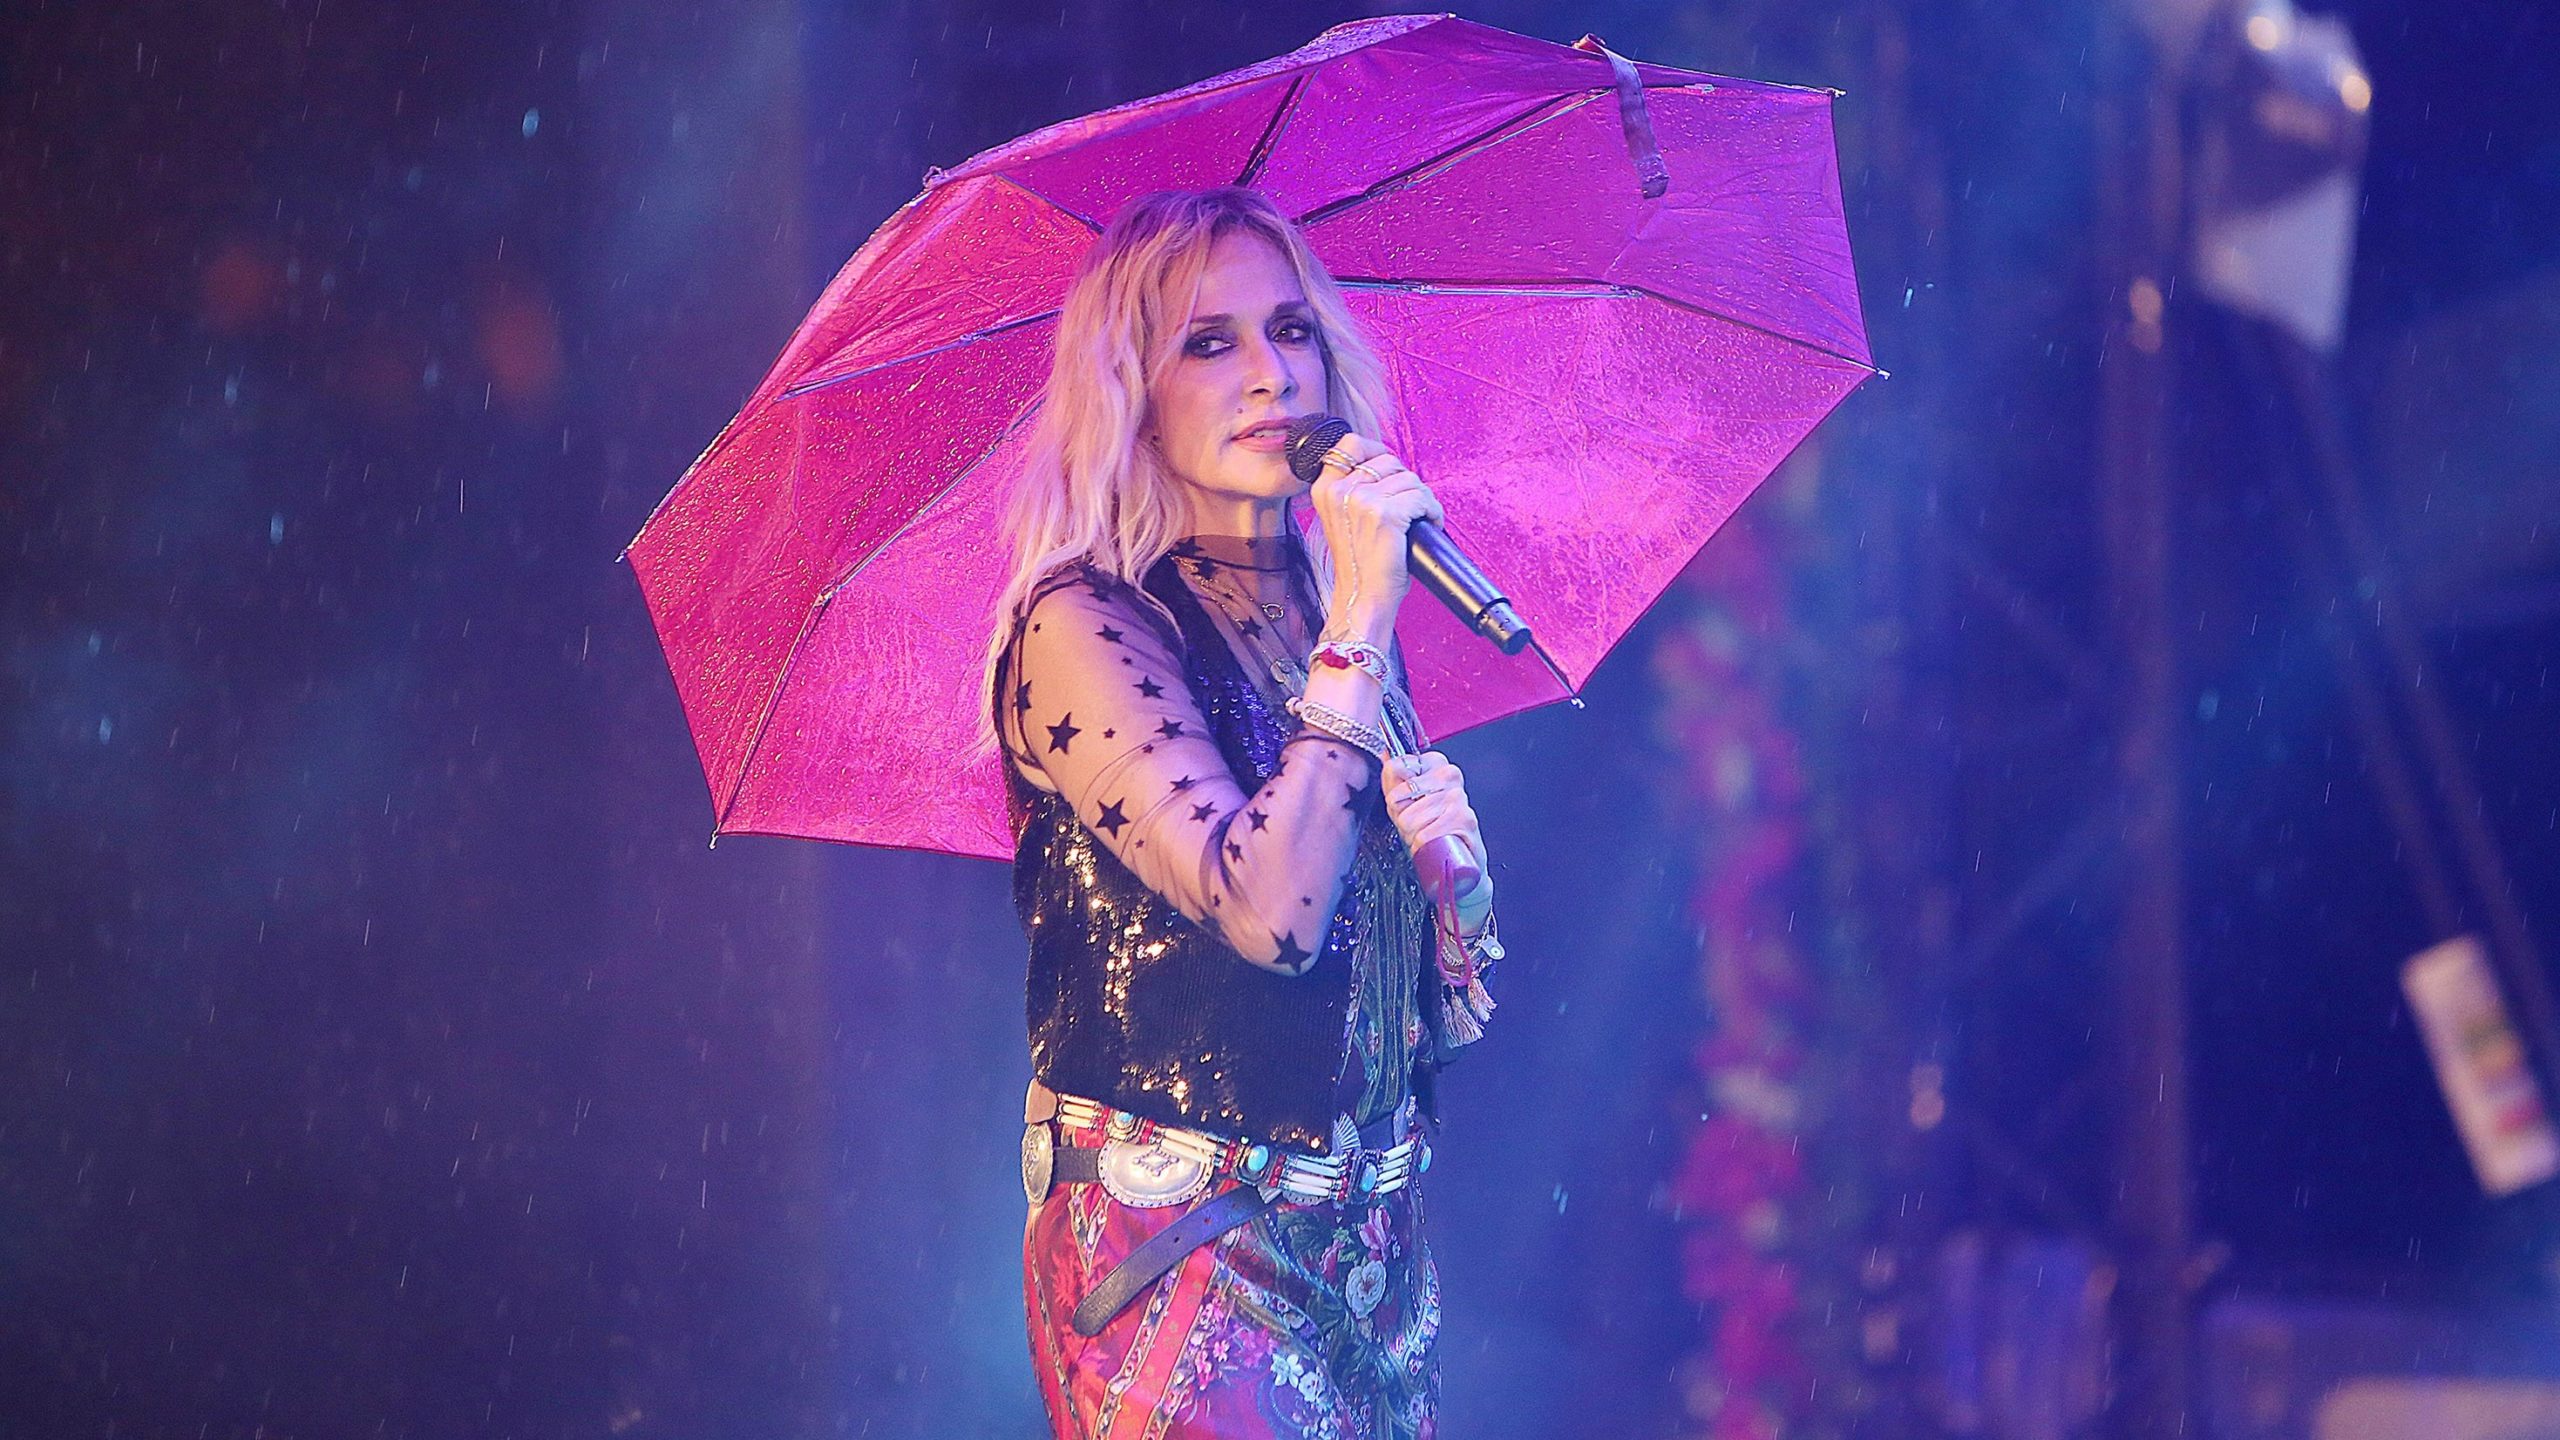 H Άννα Βίσση έδωσε συναυλία υπό βροχή και συγκίνησε τους θαυμαστές της